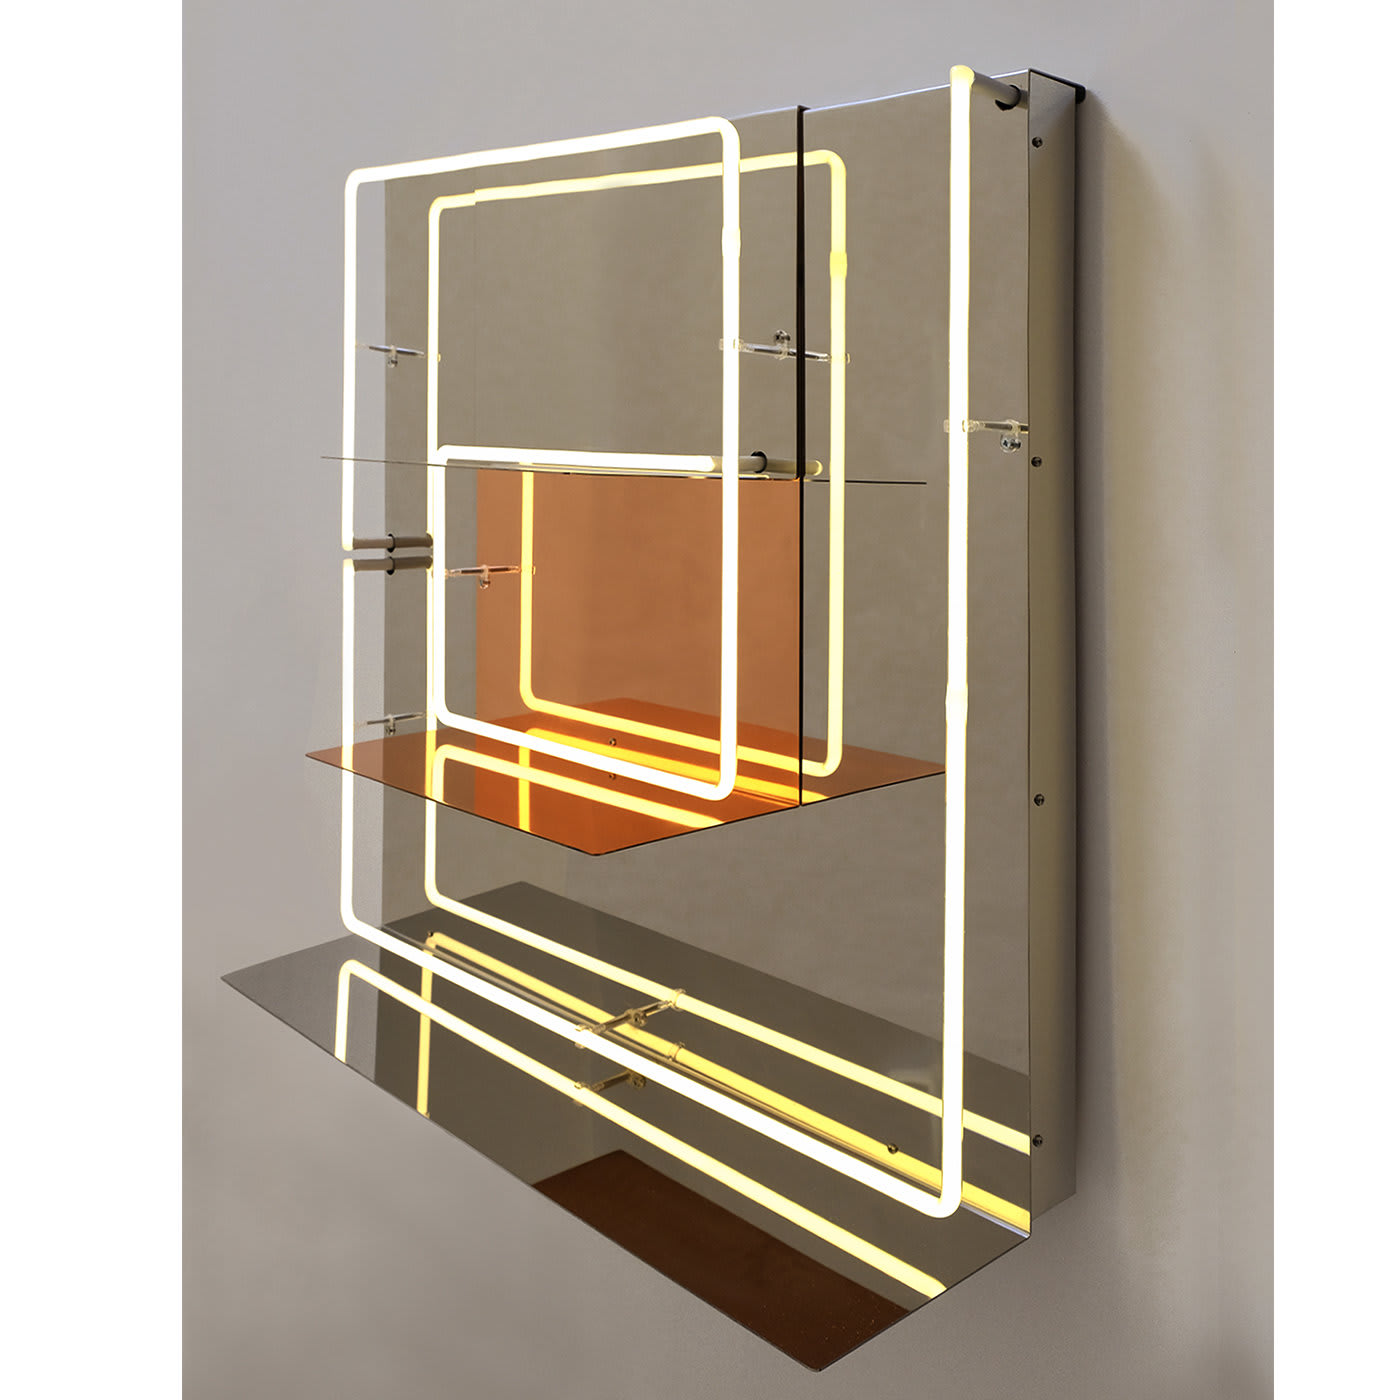 Luminous Panel #2 by Paolo Giordano and Ouwen Mori - Paolo Giordano